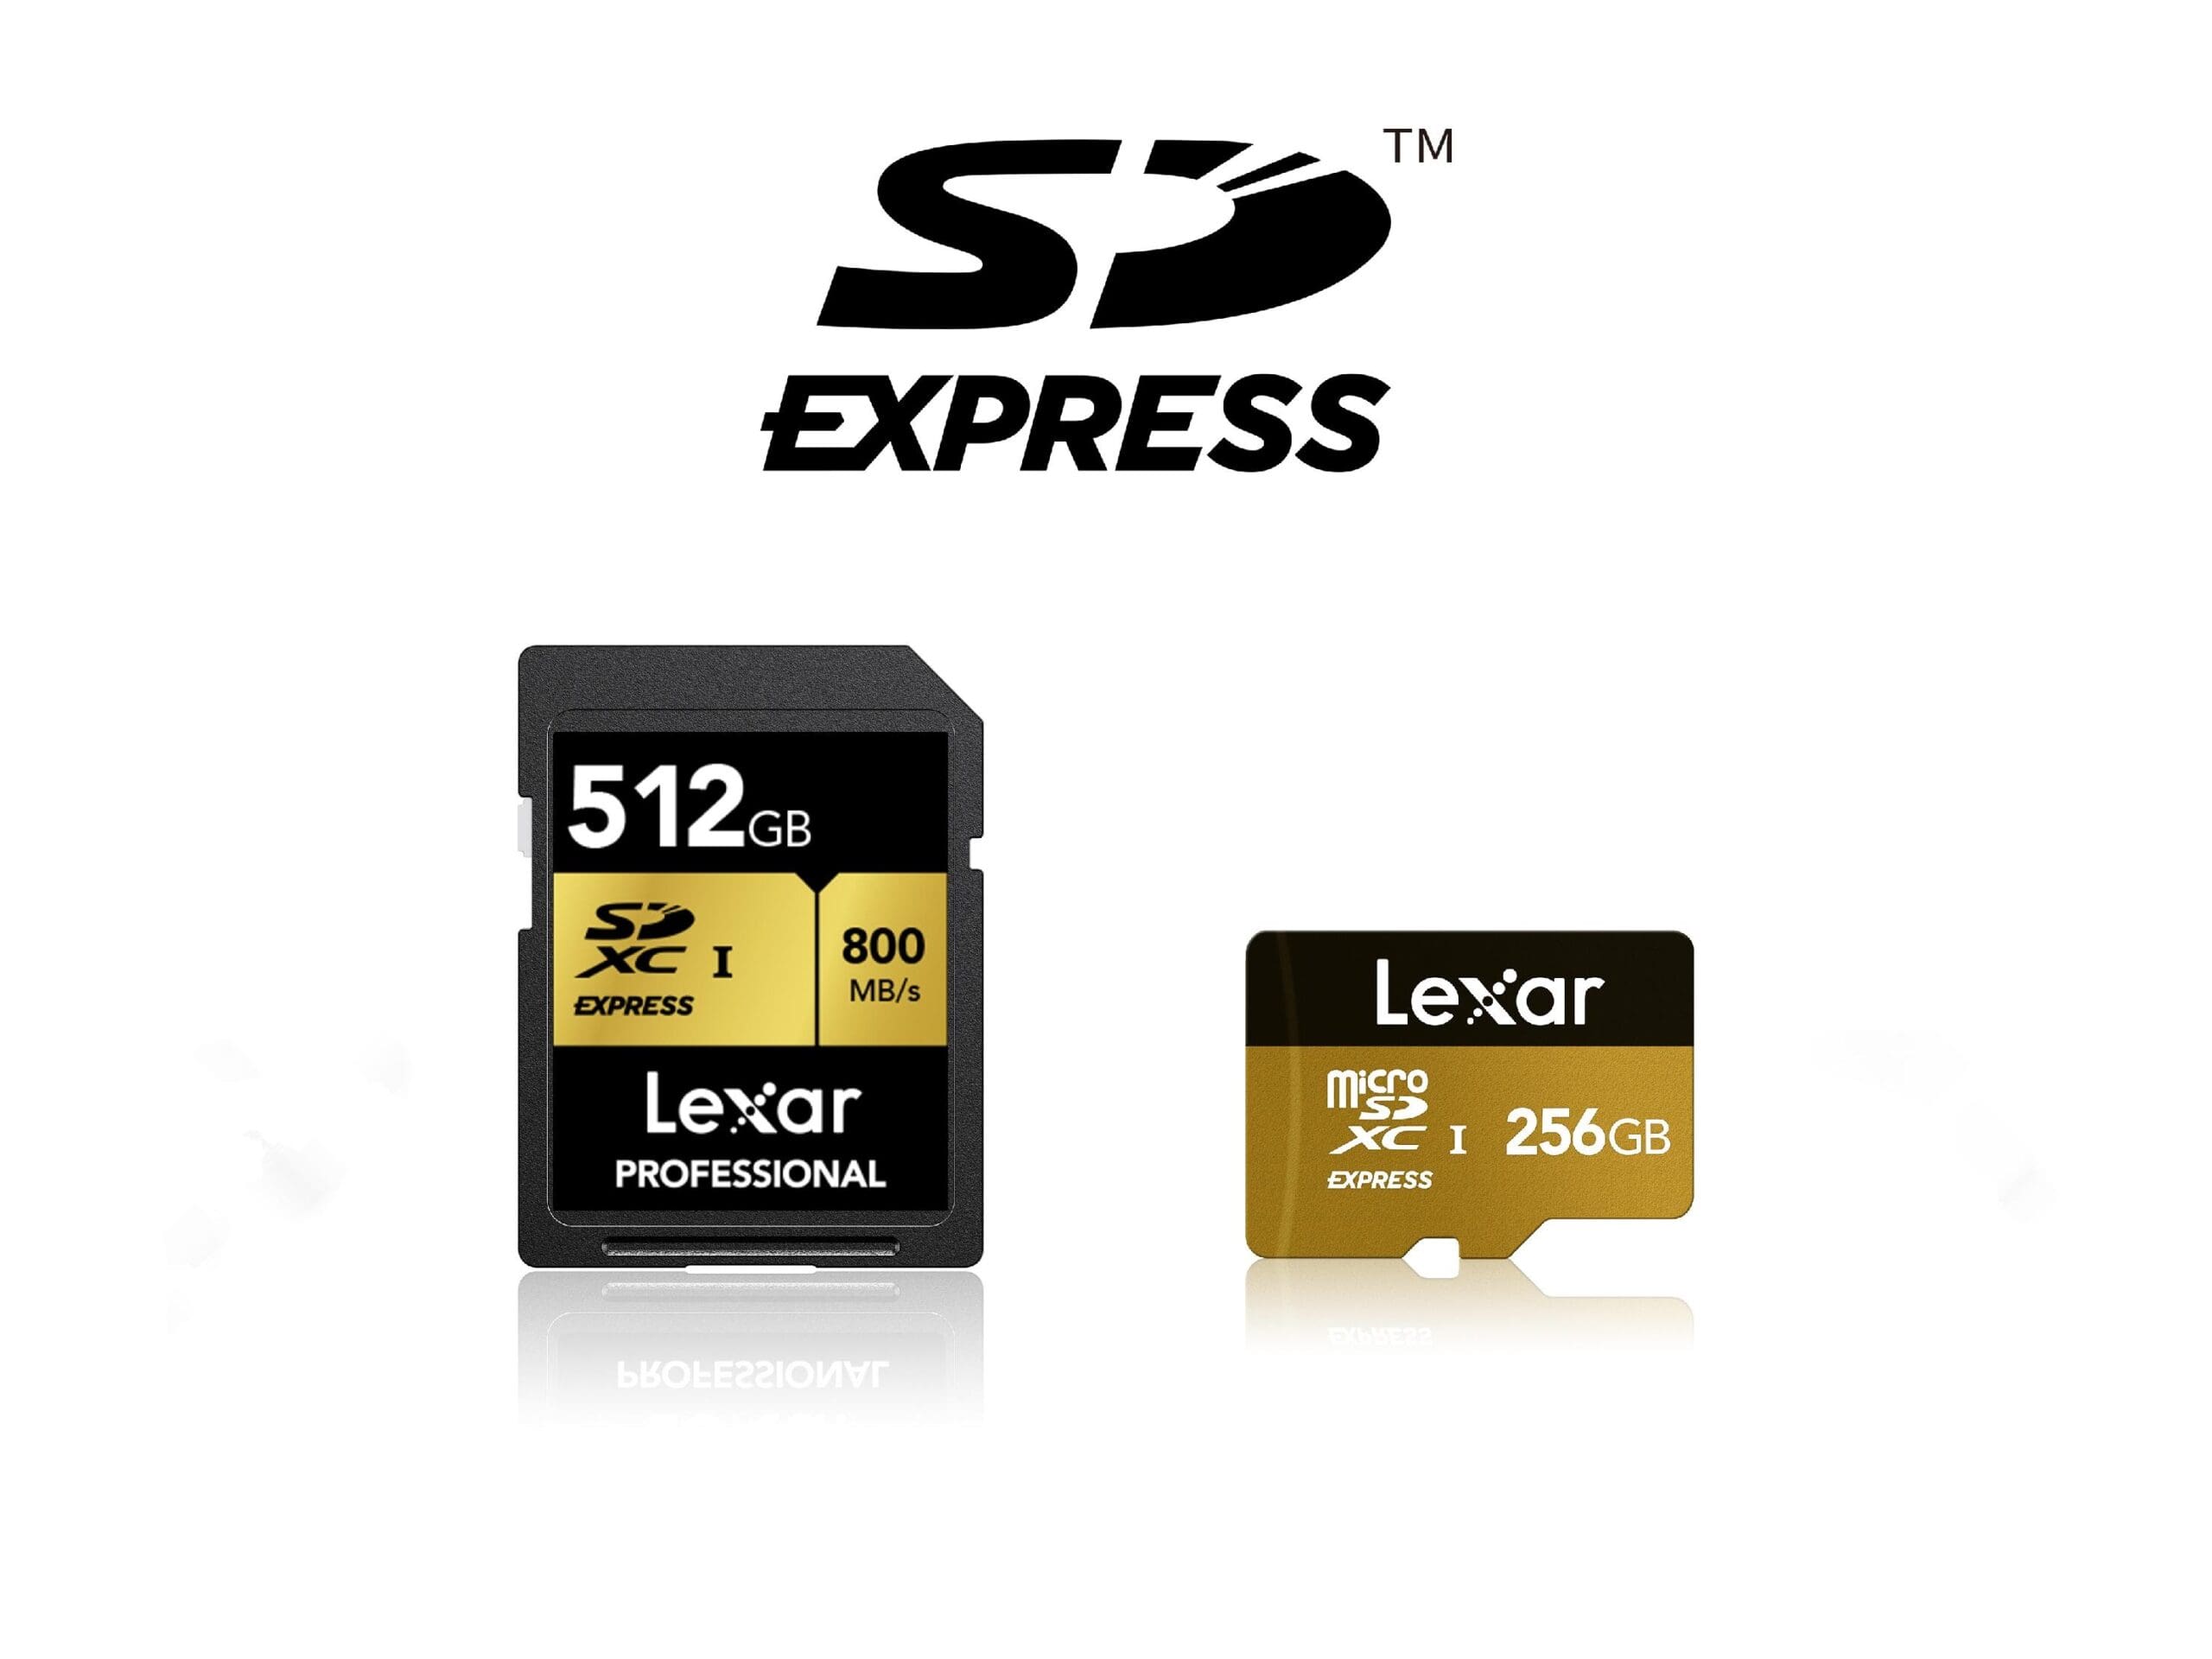 Lexar SD Express scaled